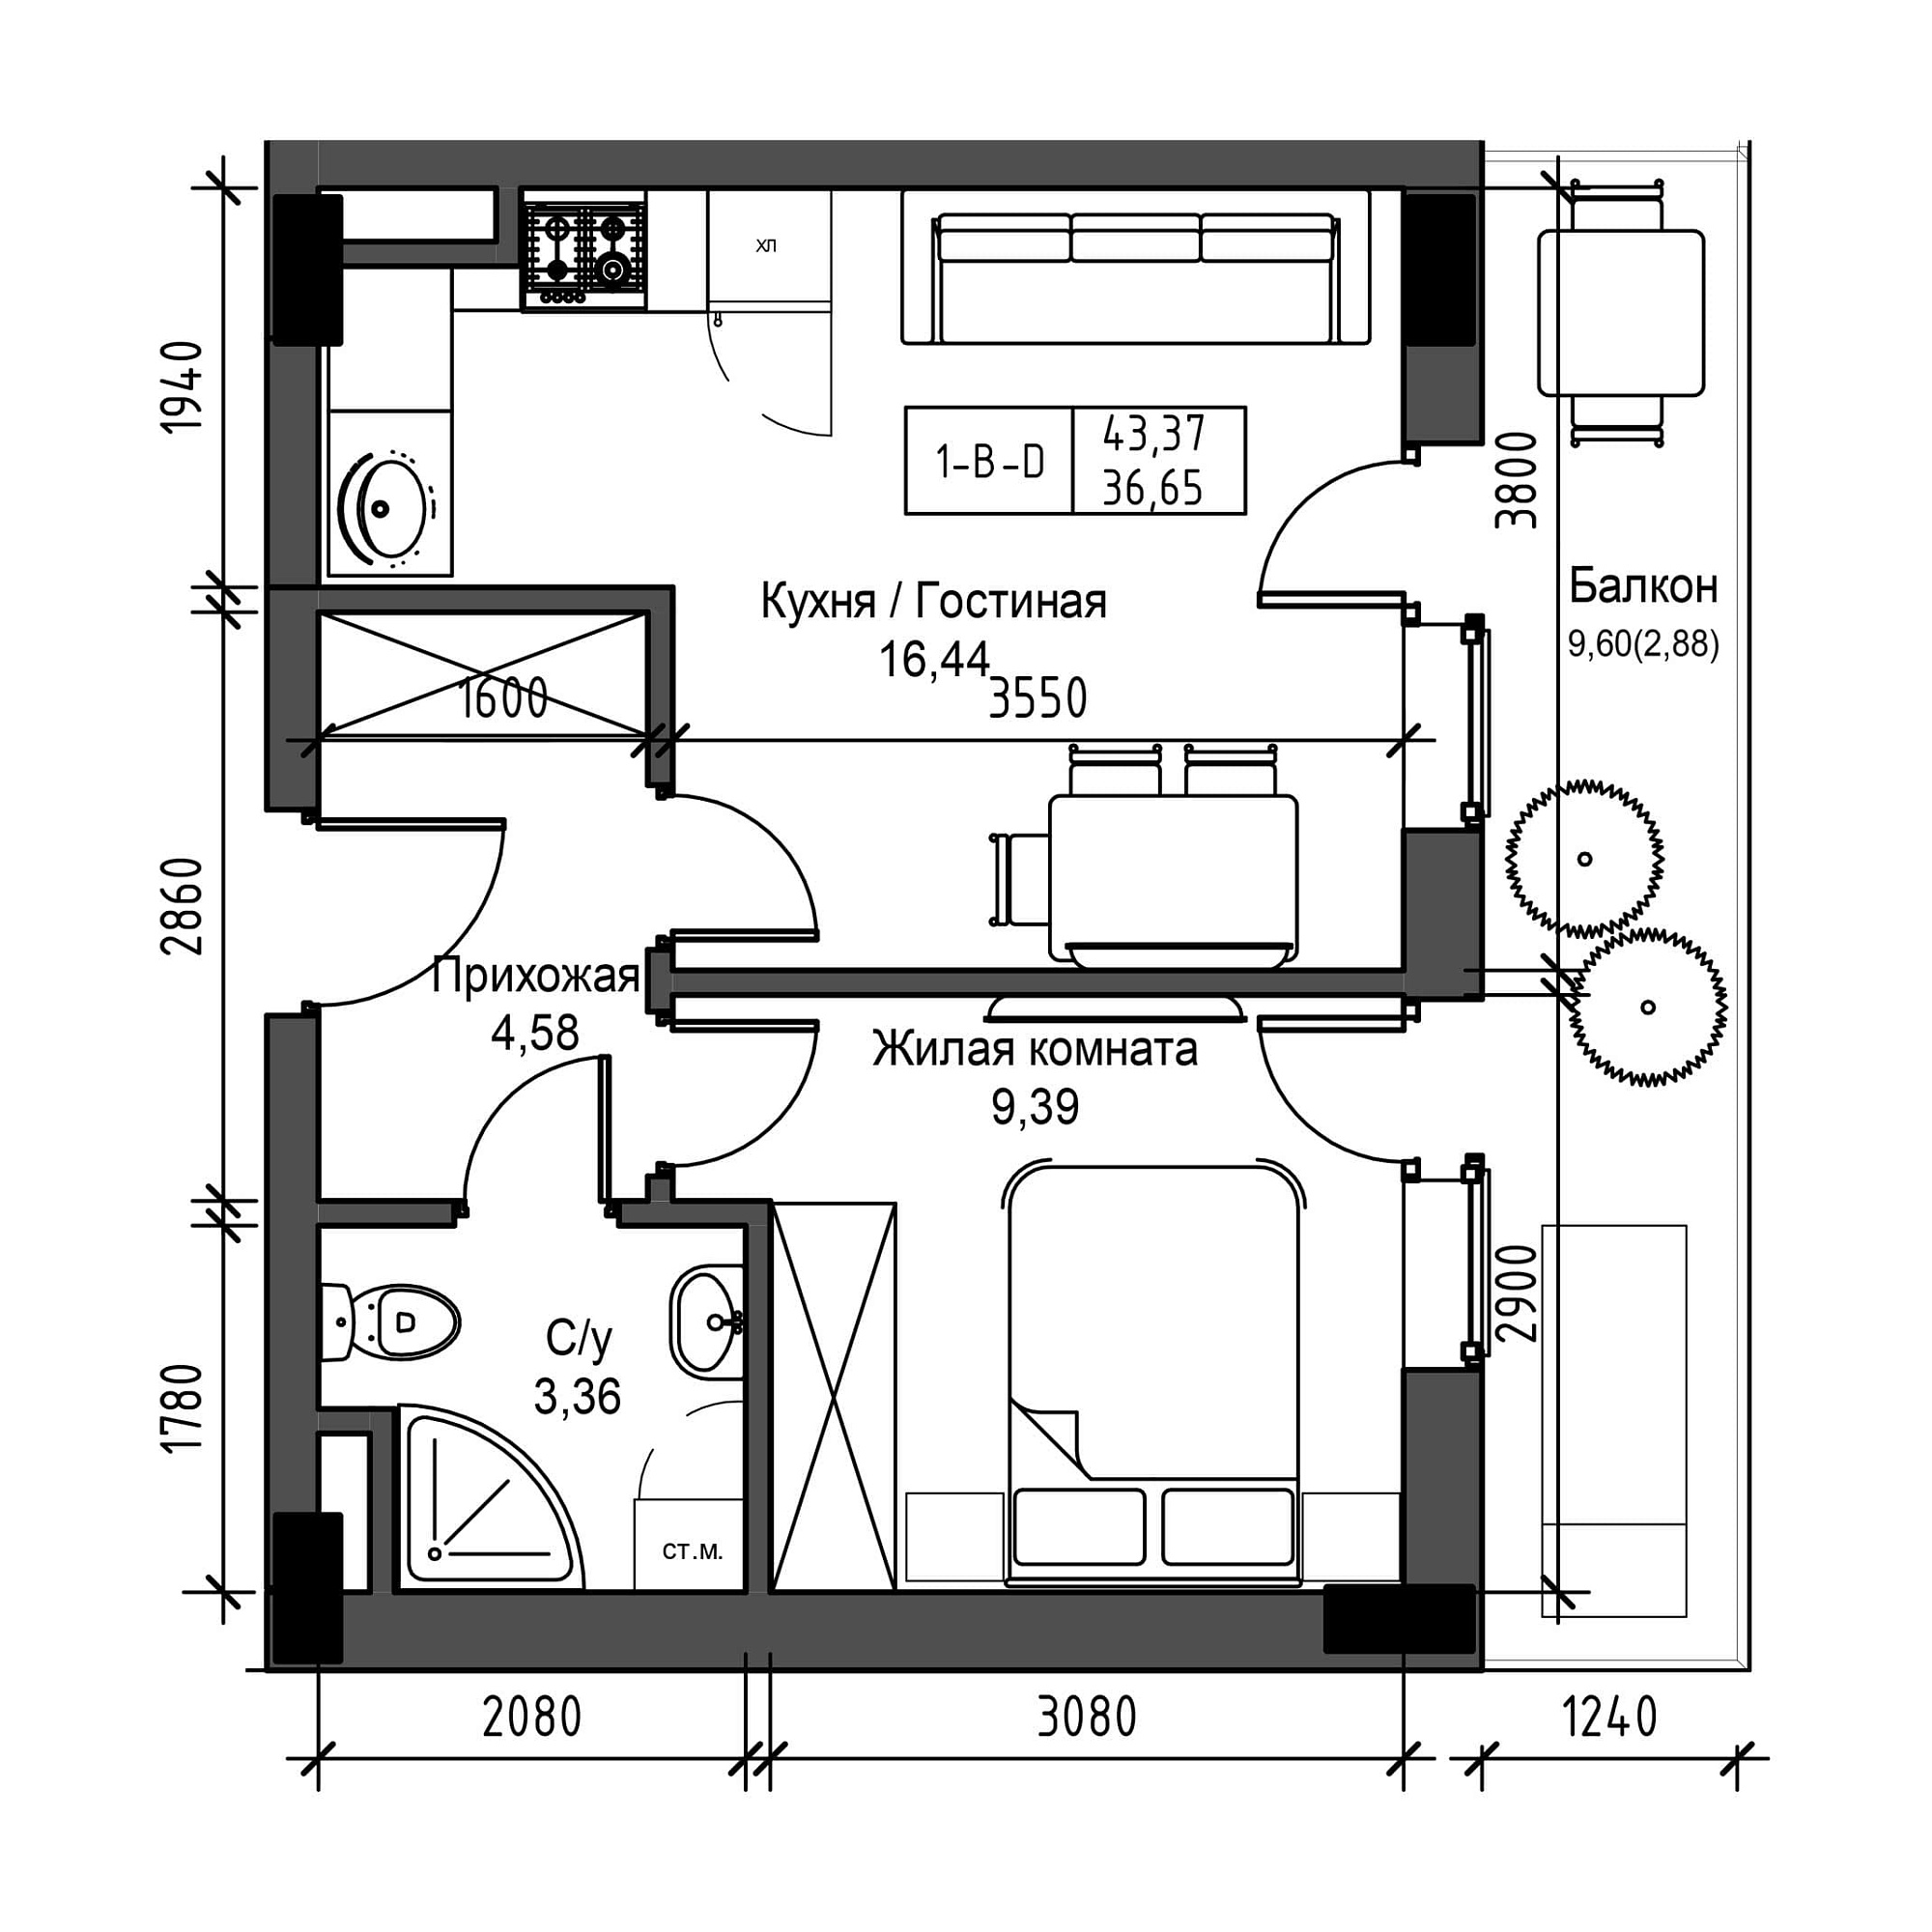 Planning 1-rm flats area 36.65m2, UM-001-06/0002.